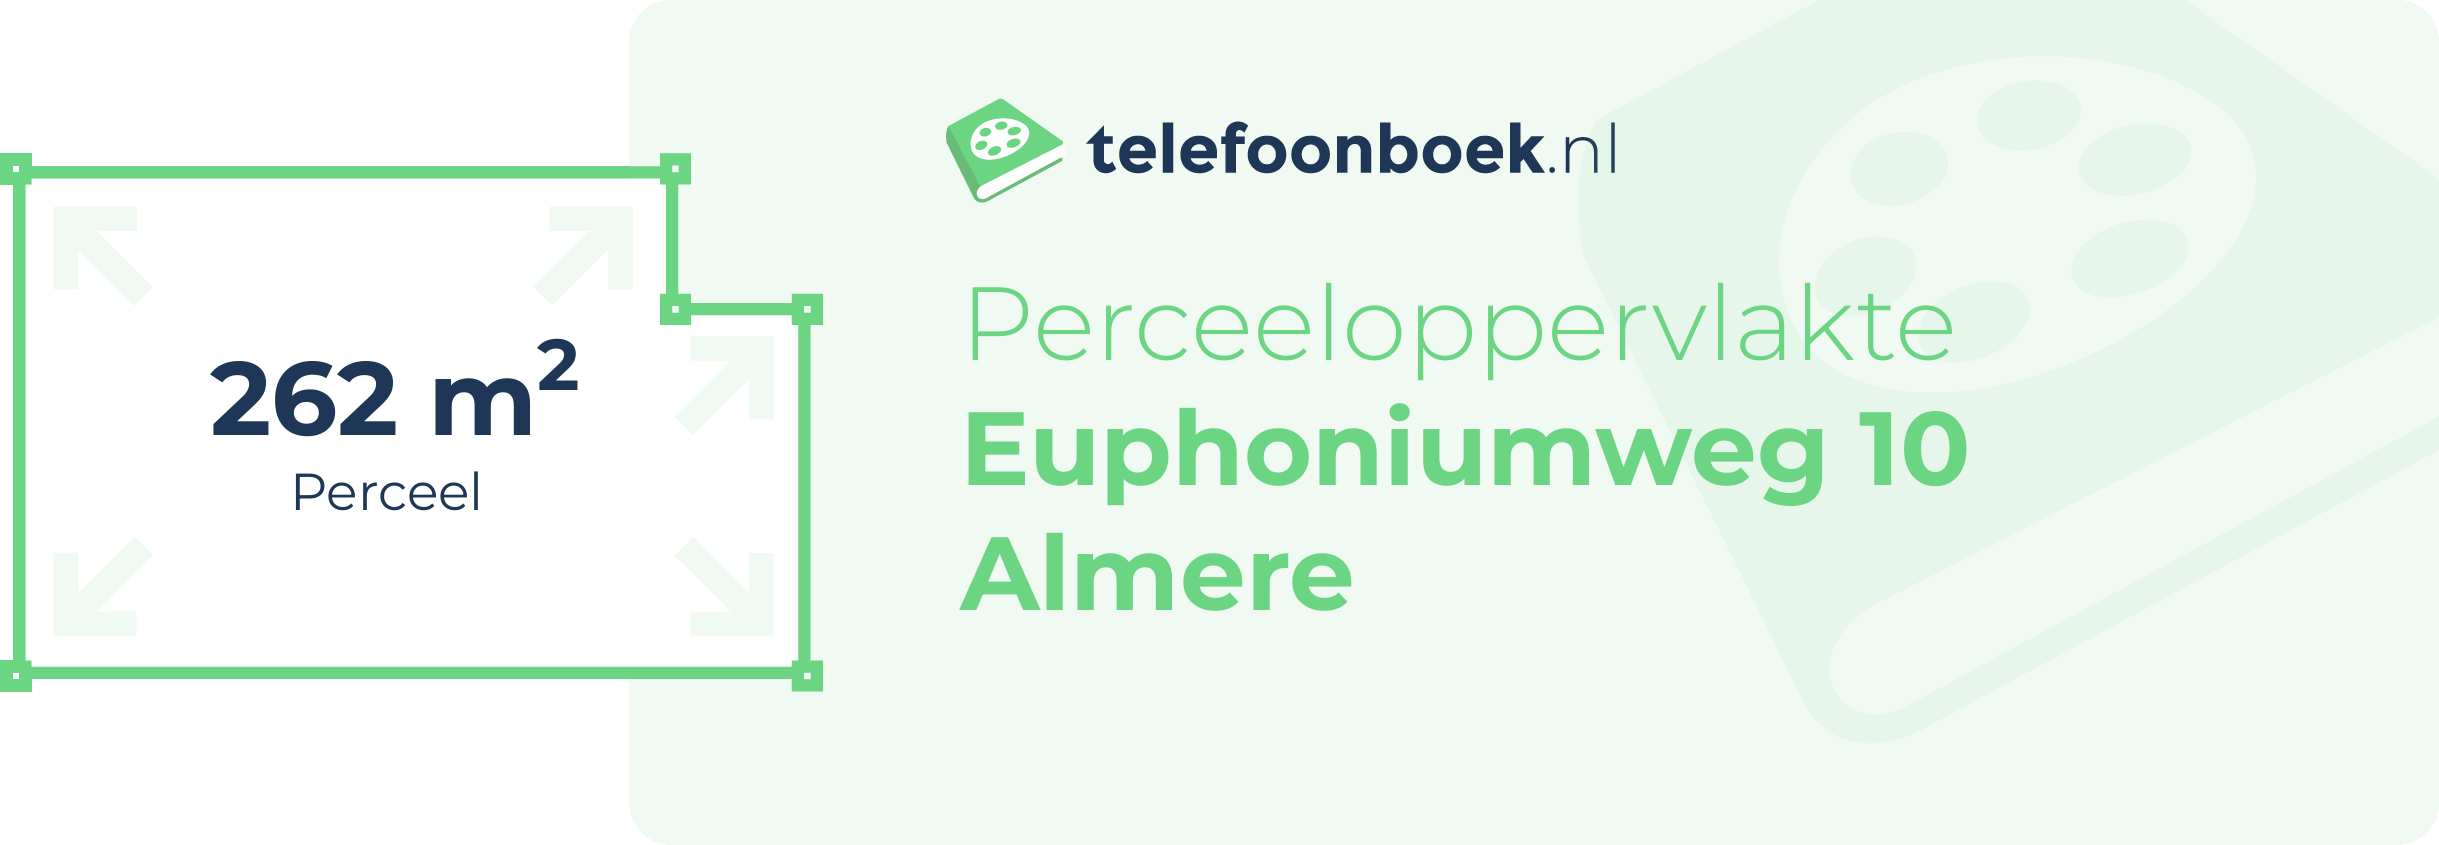 Perceeloppervlakte Euphoniumweg 10 Almere